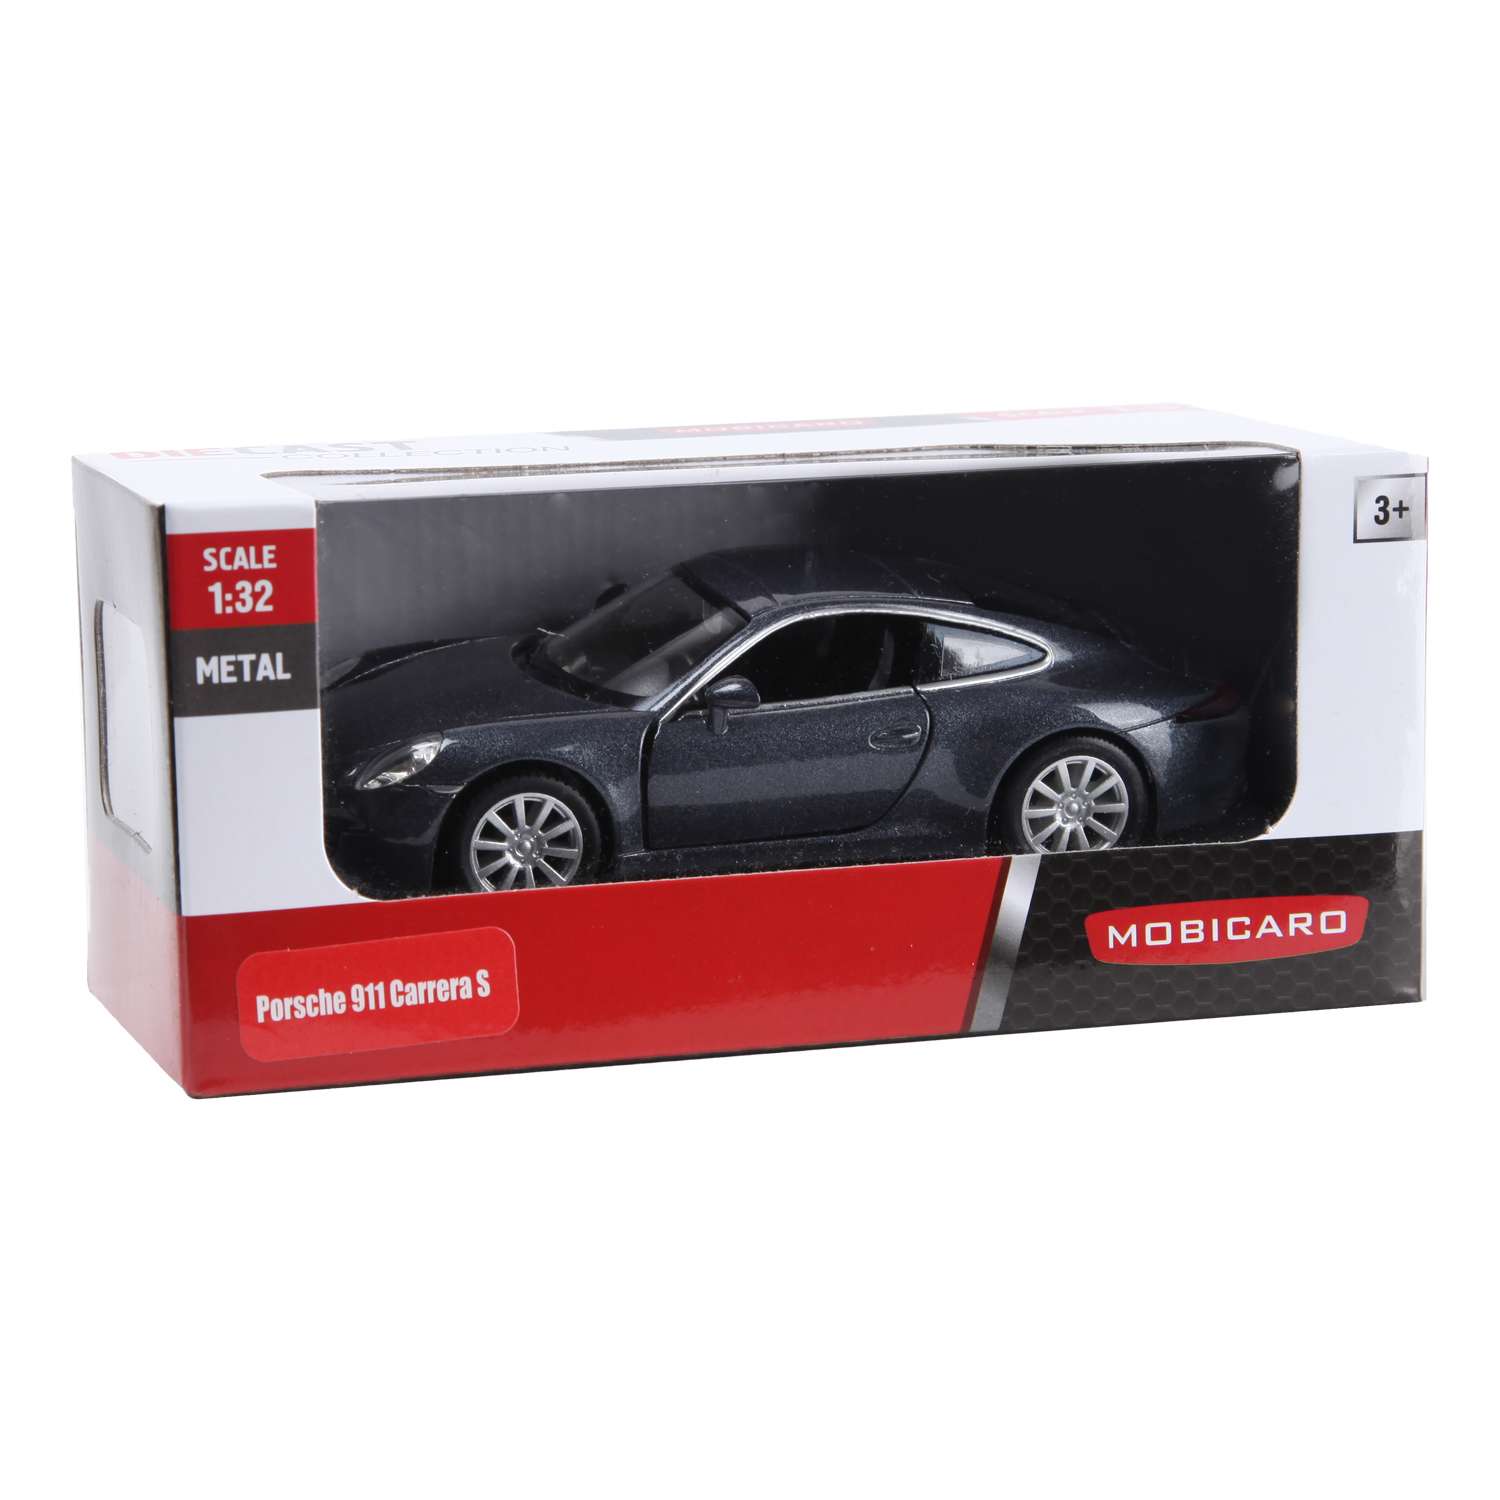 Машинка Mobicaro Porsche 911 Turbo 1:43 в ассортиментте 444010 - фото 10